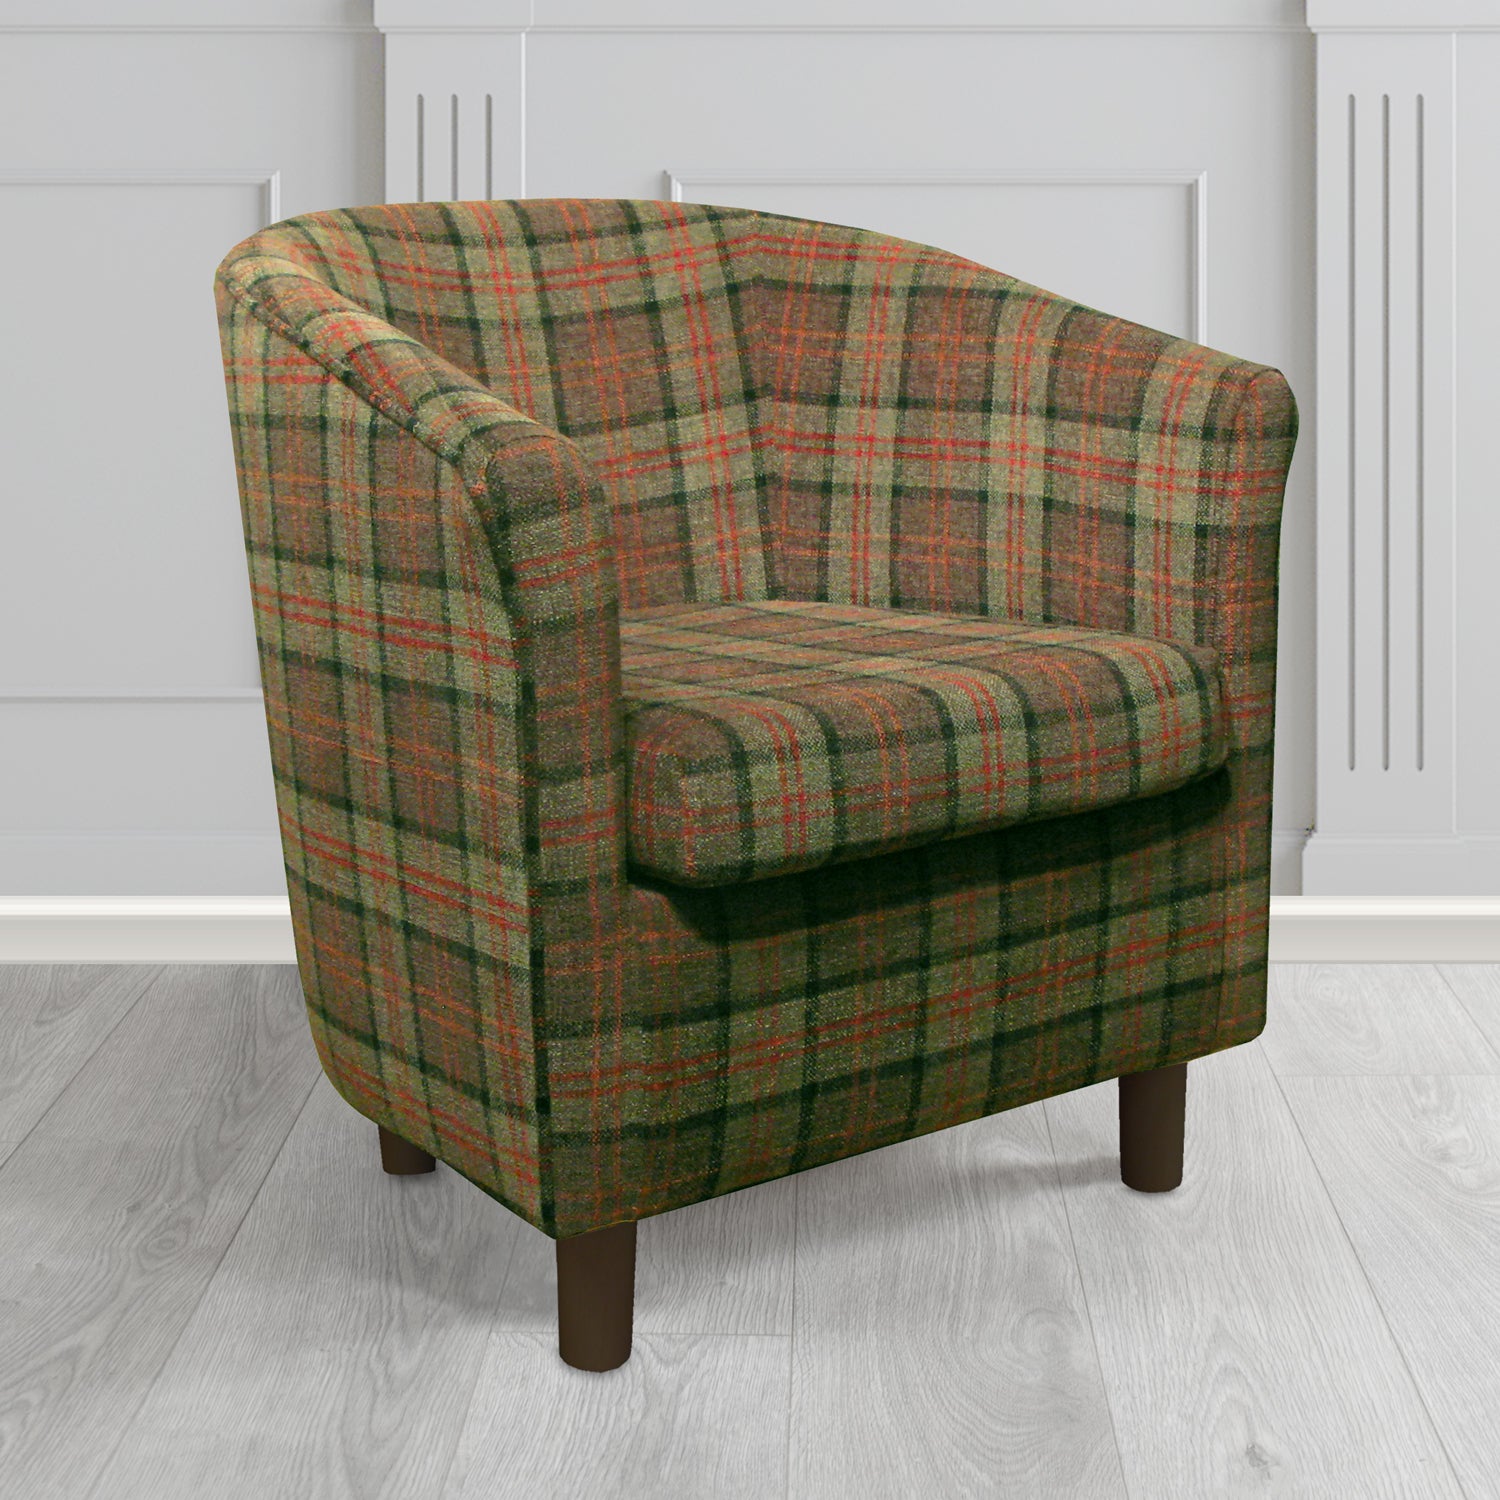 Tuscany Tub Chair in Lana Moss Tartan LAN1259 Crib 5 Fabric